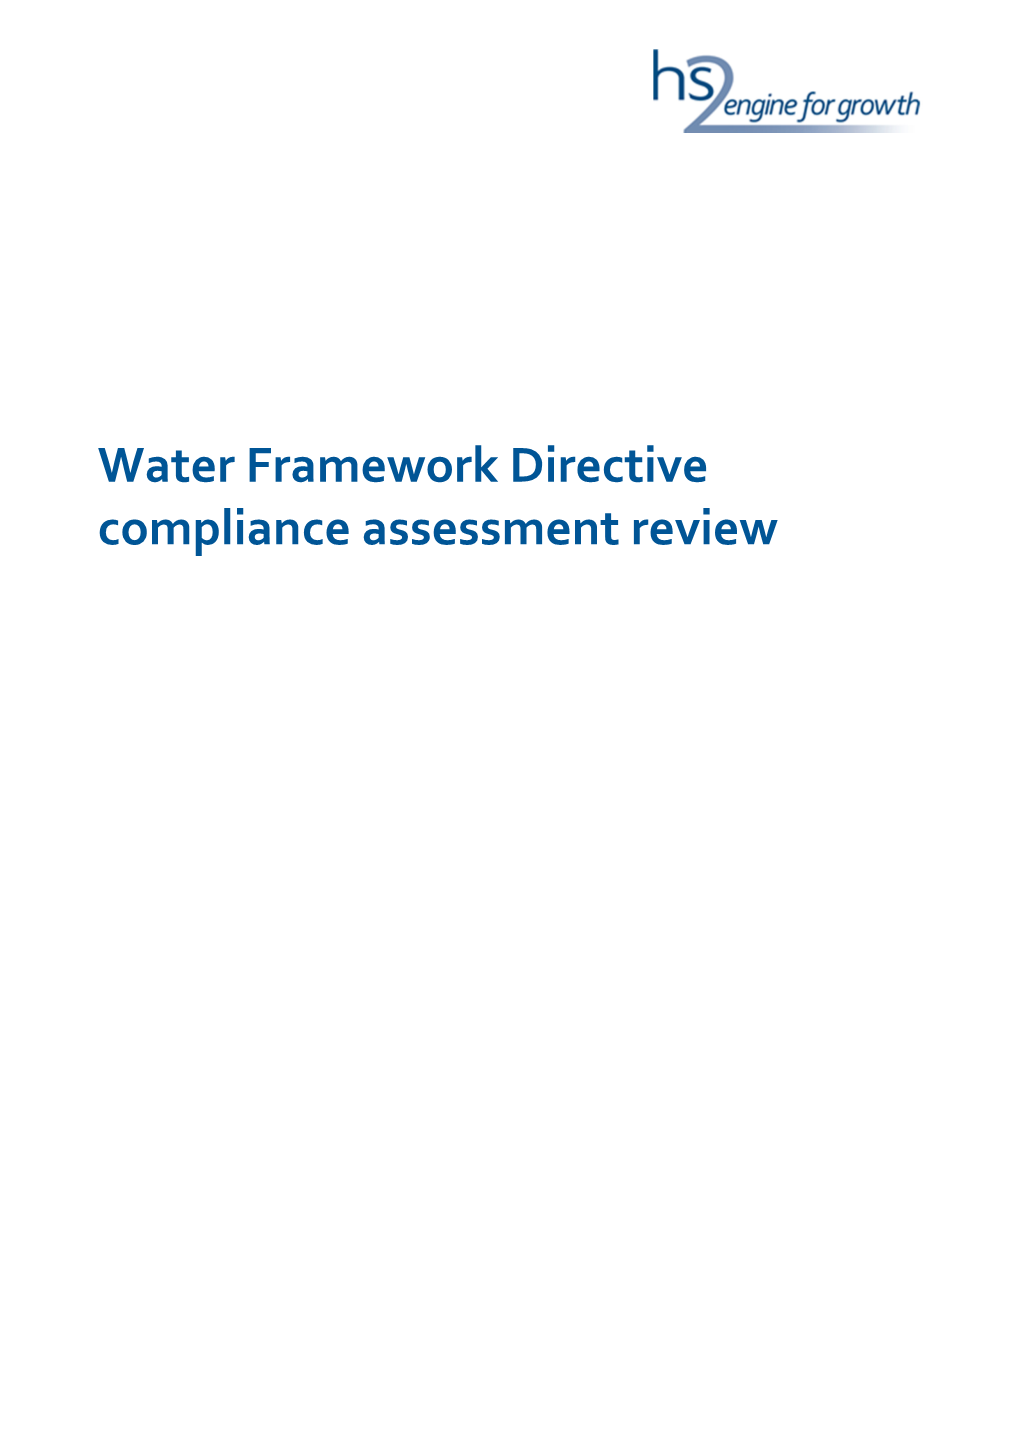 Water Framework Directive Compliance Assessment Review